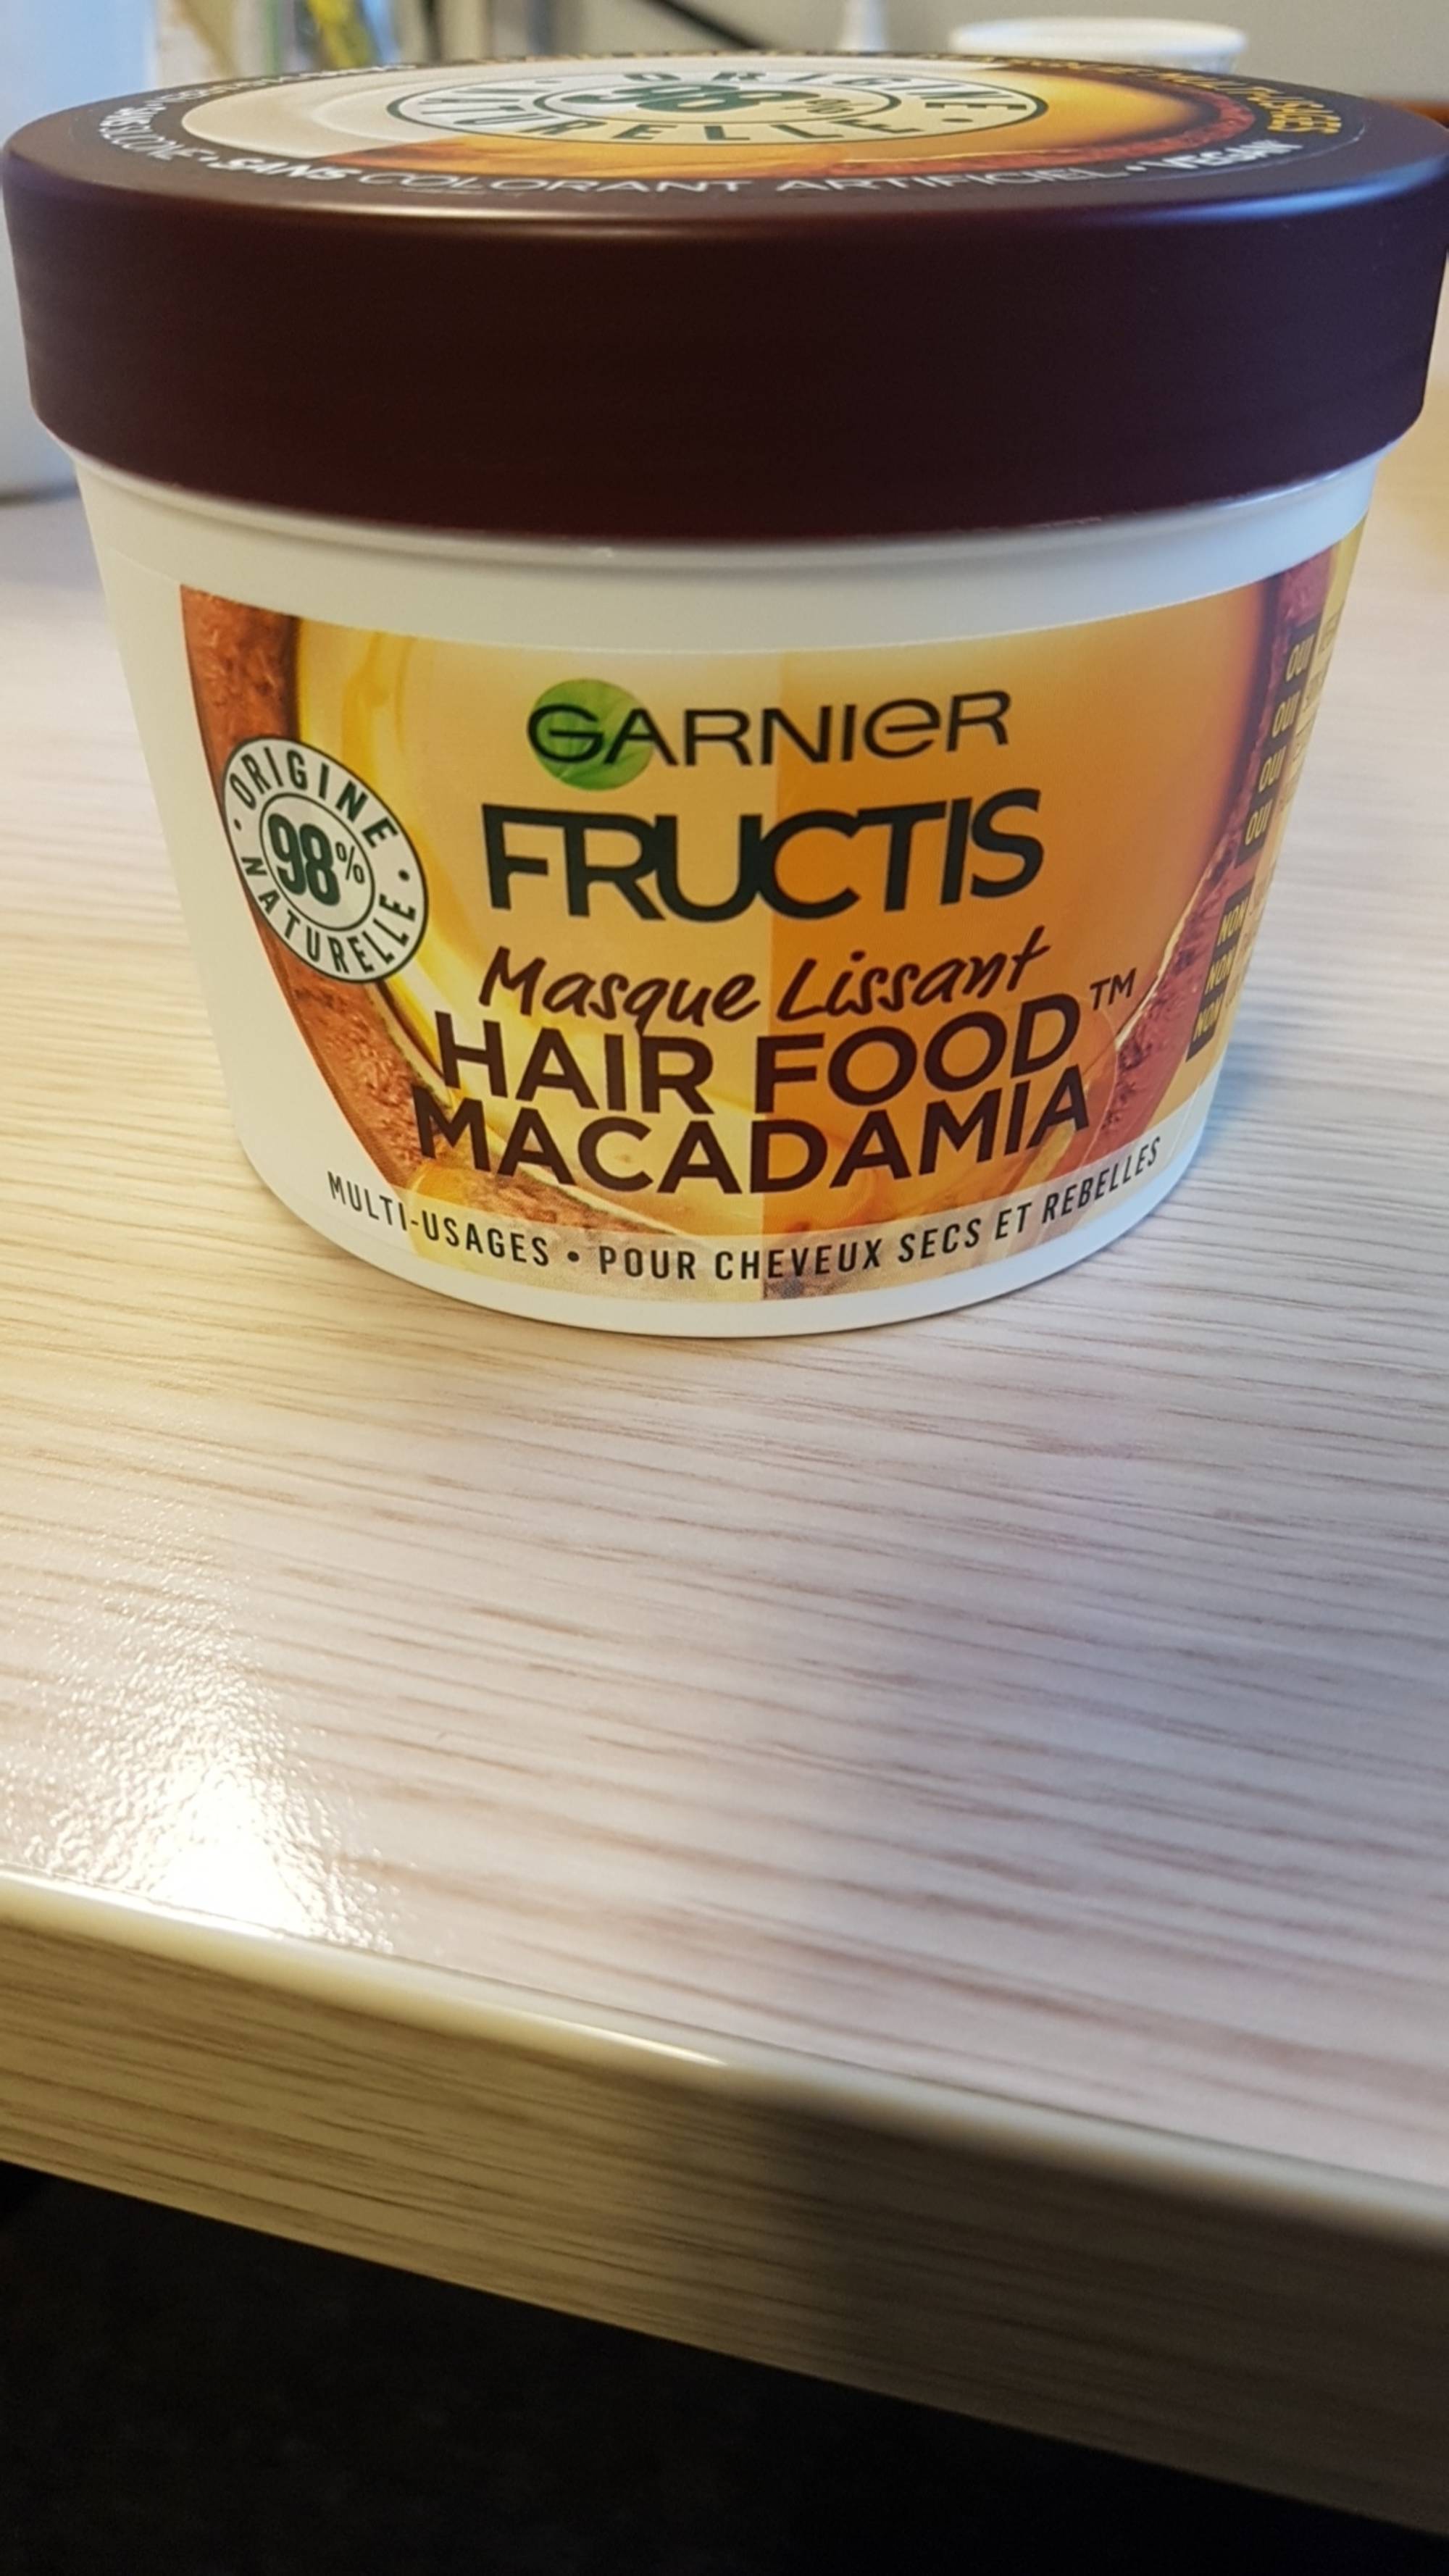 GARNIER - Fructis - Masque lissant hair food macadamia